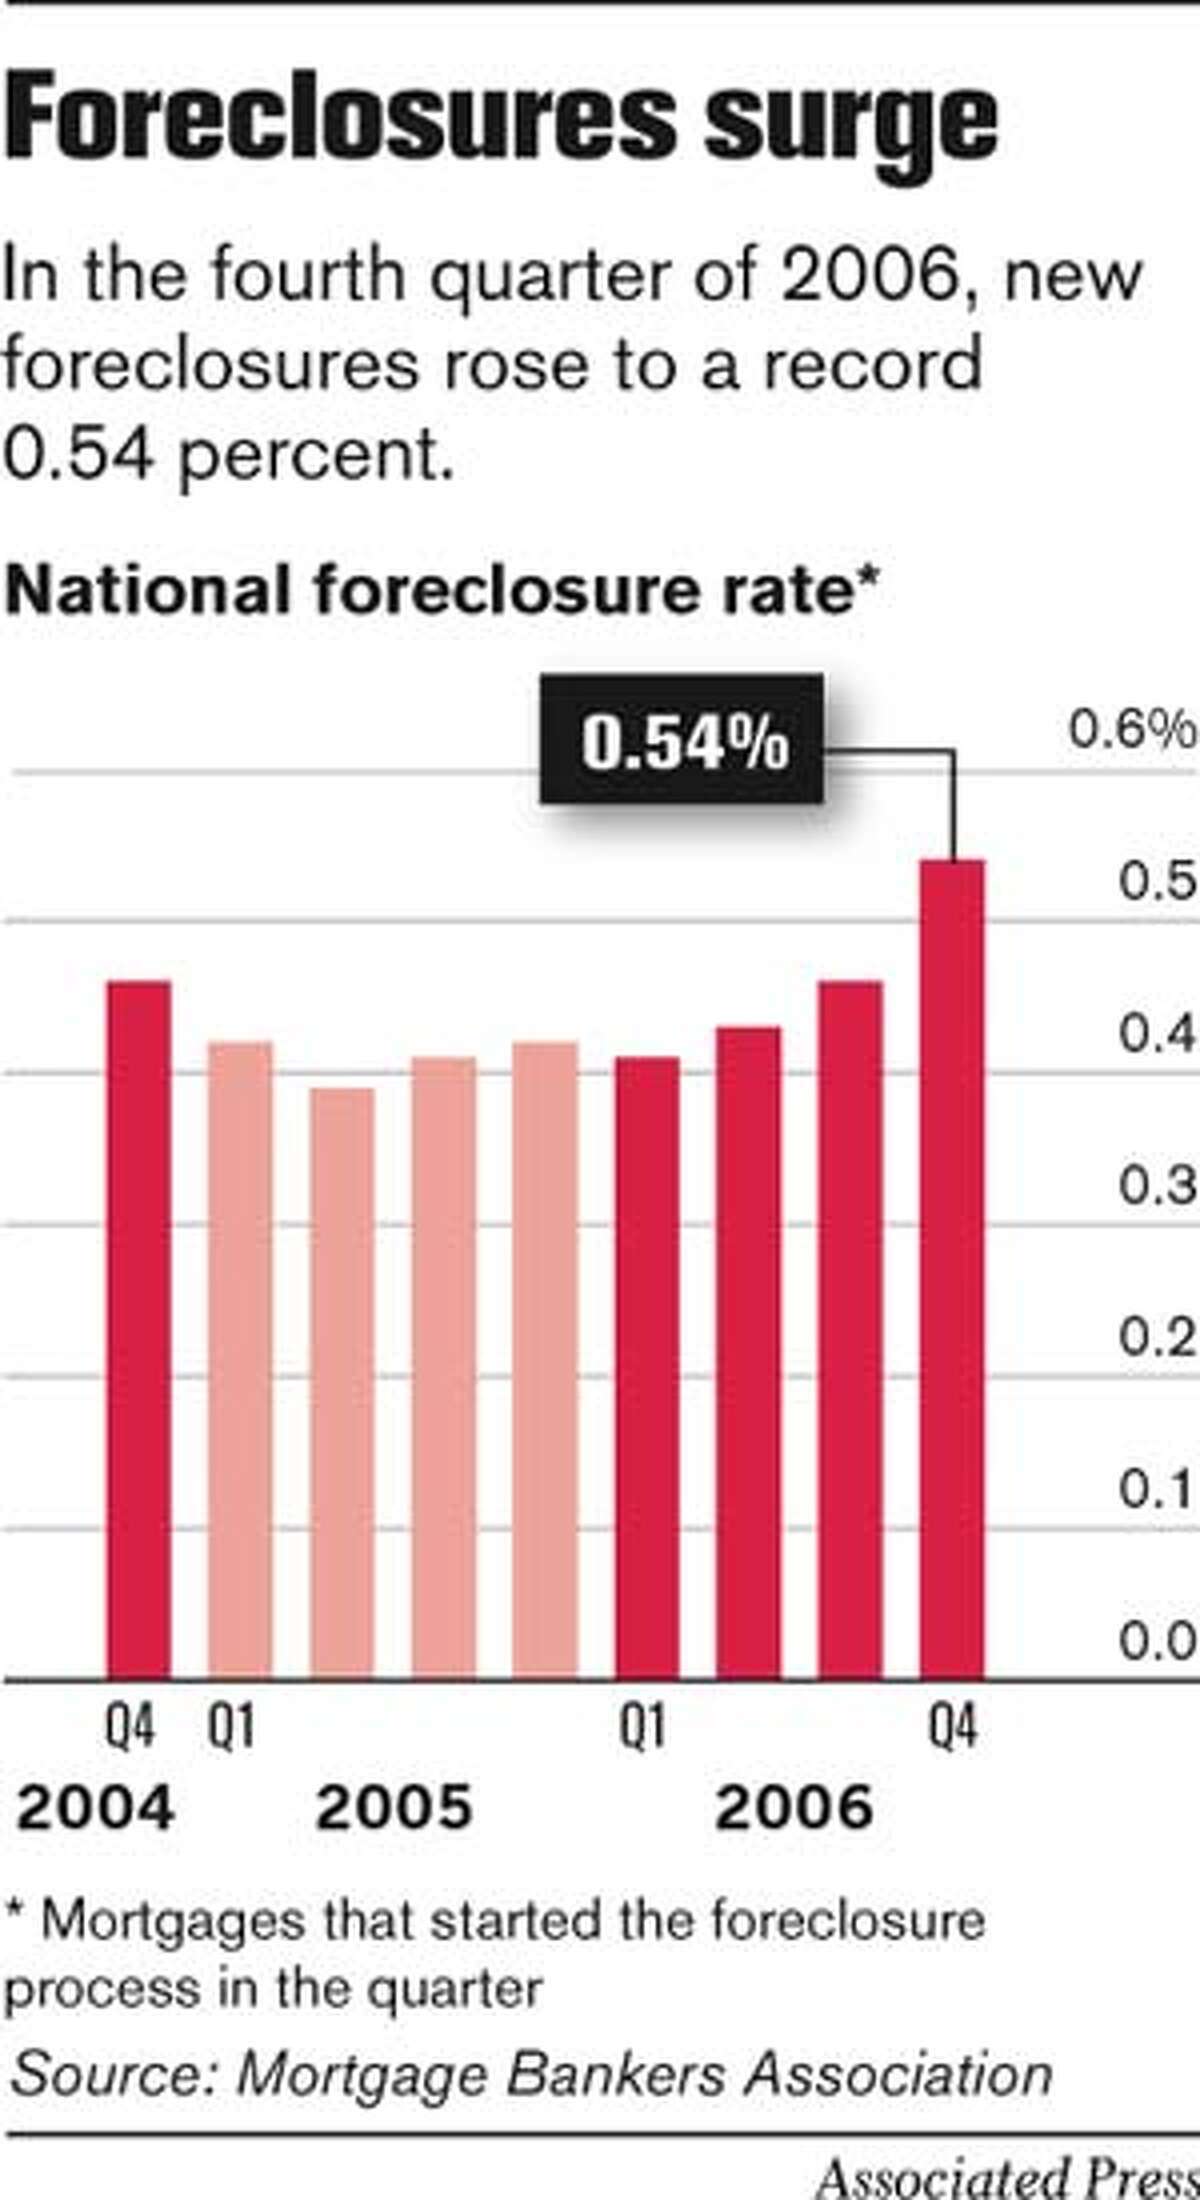 Foreclosures Surge. Associated Press Graphic